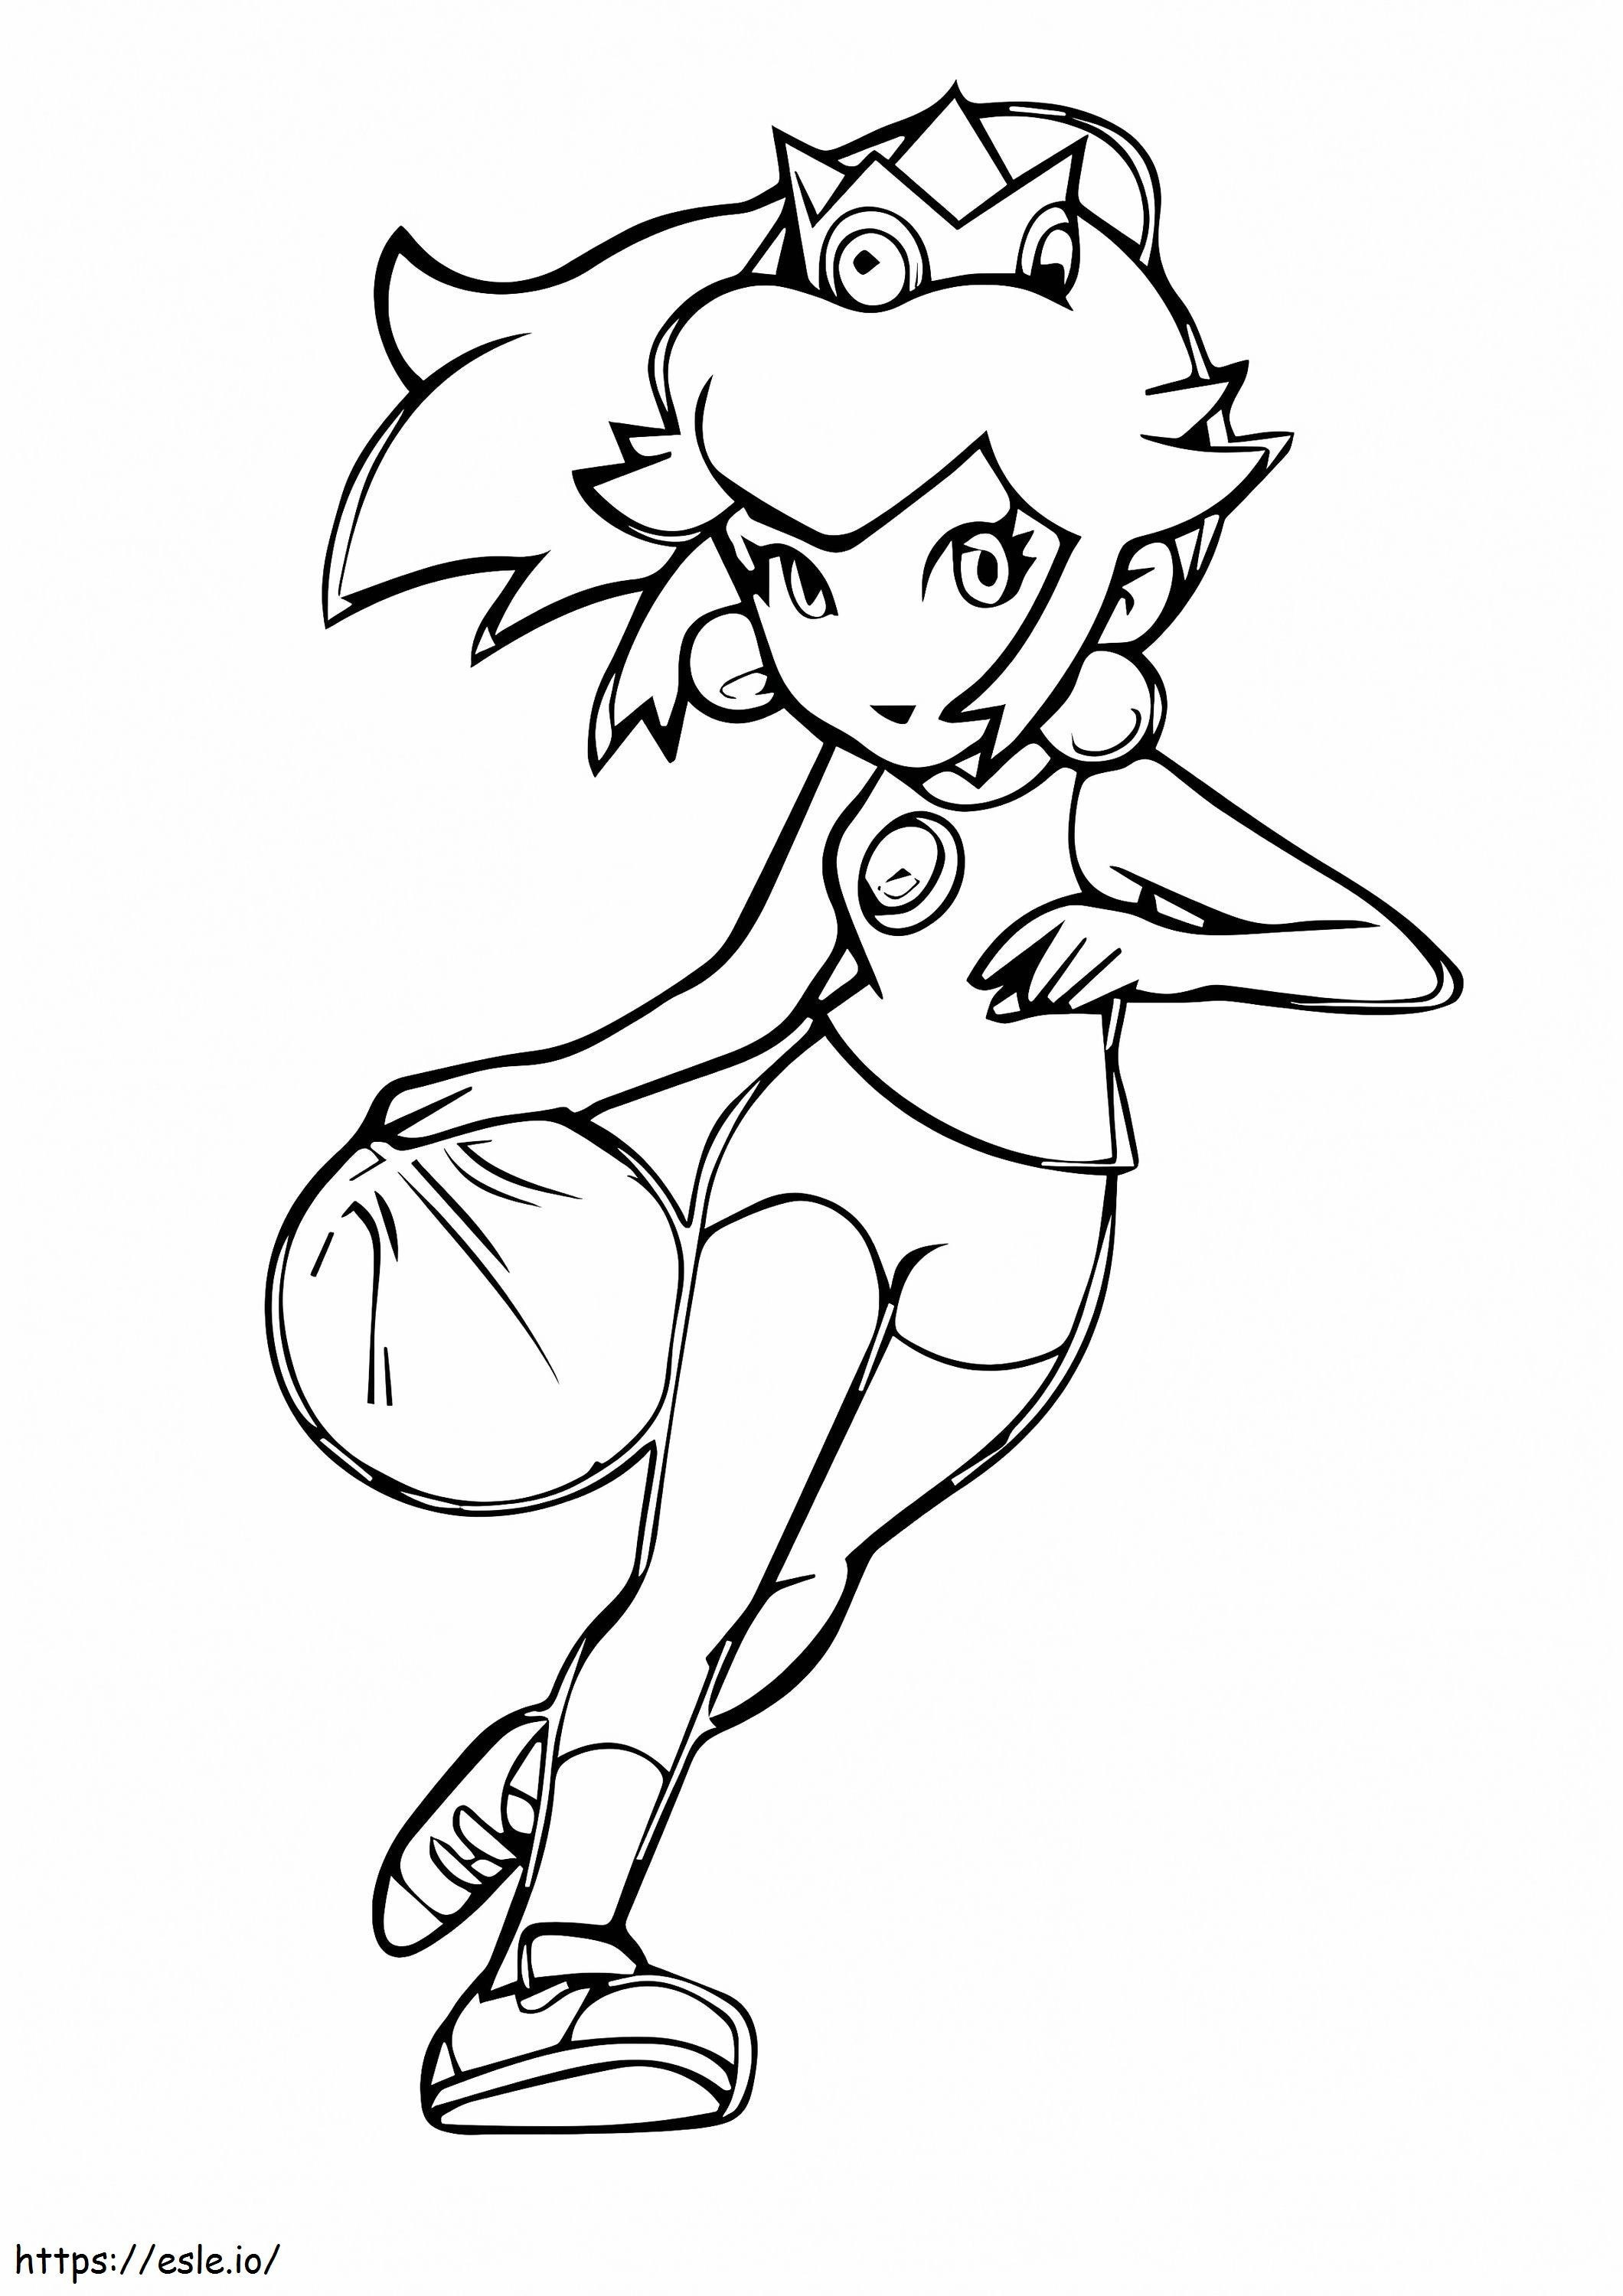 Princess Peach Play Basket Ball A4 coloring page